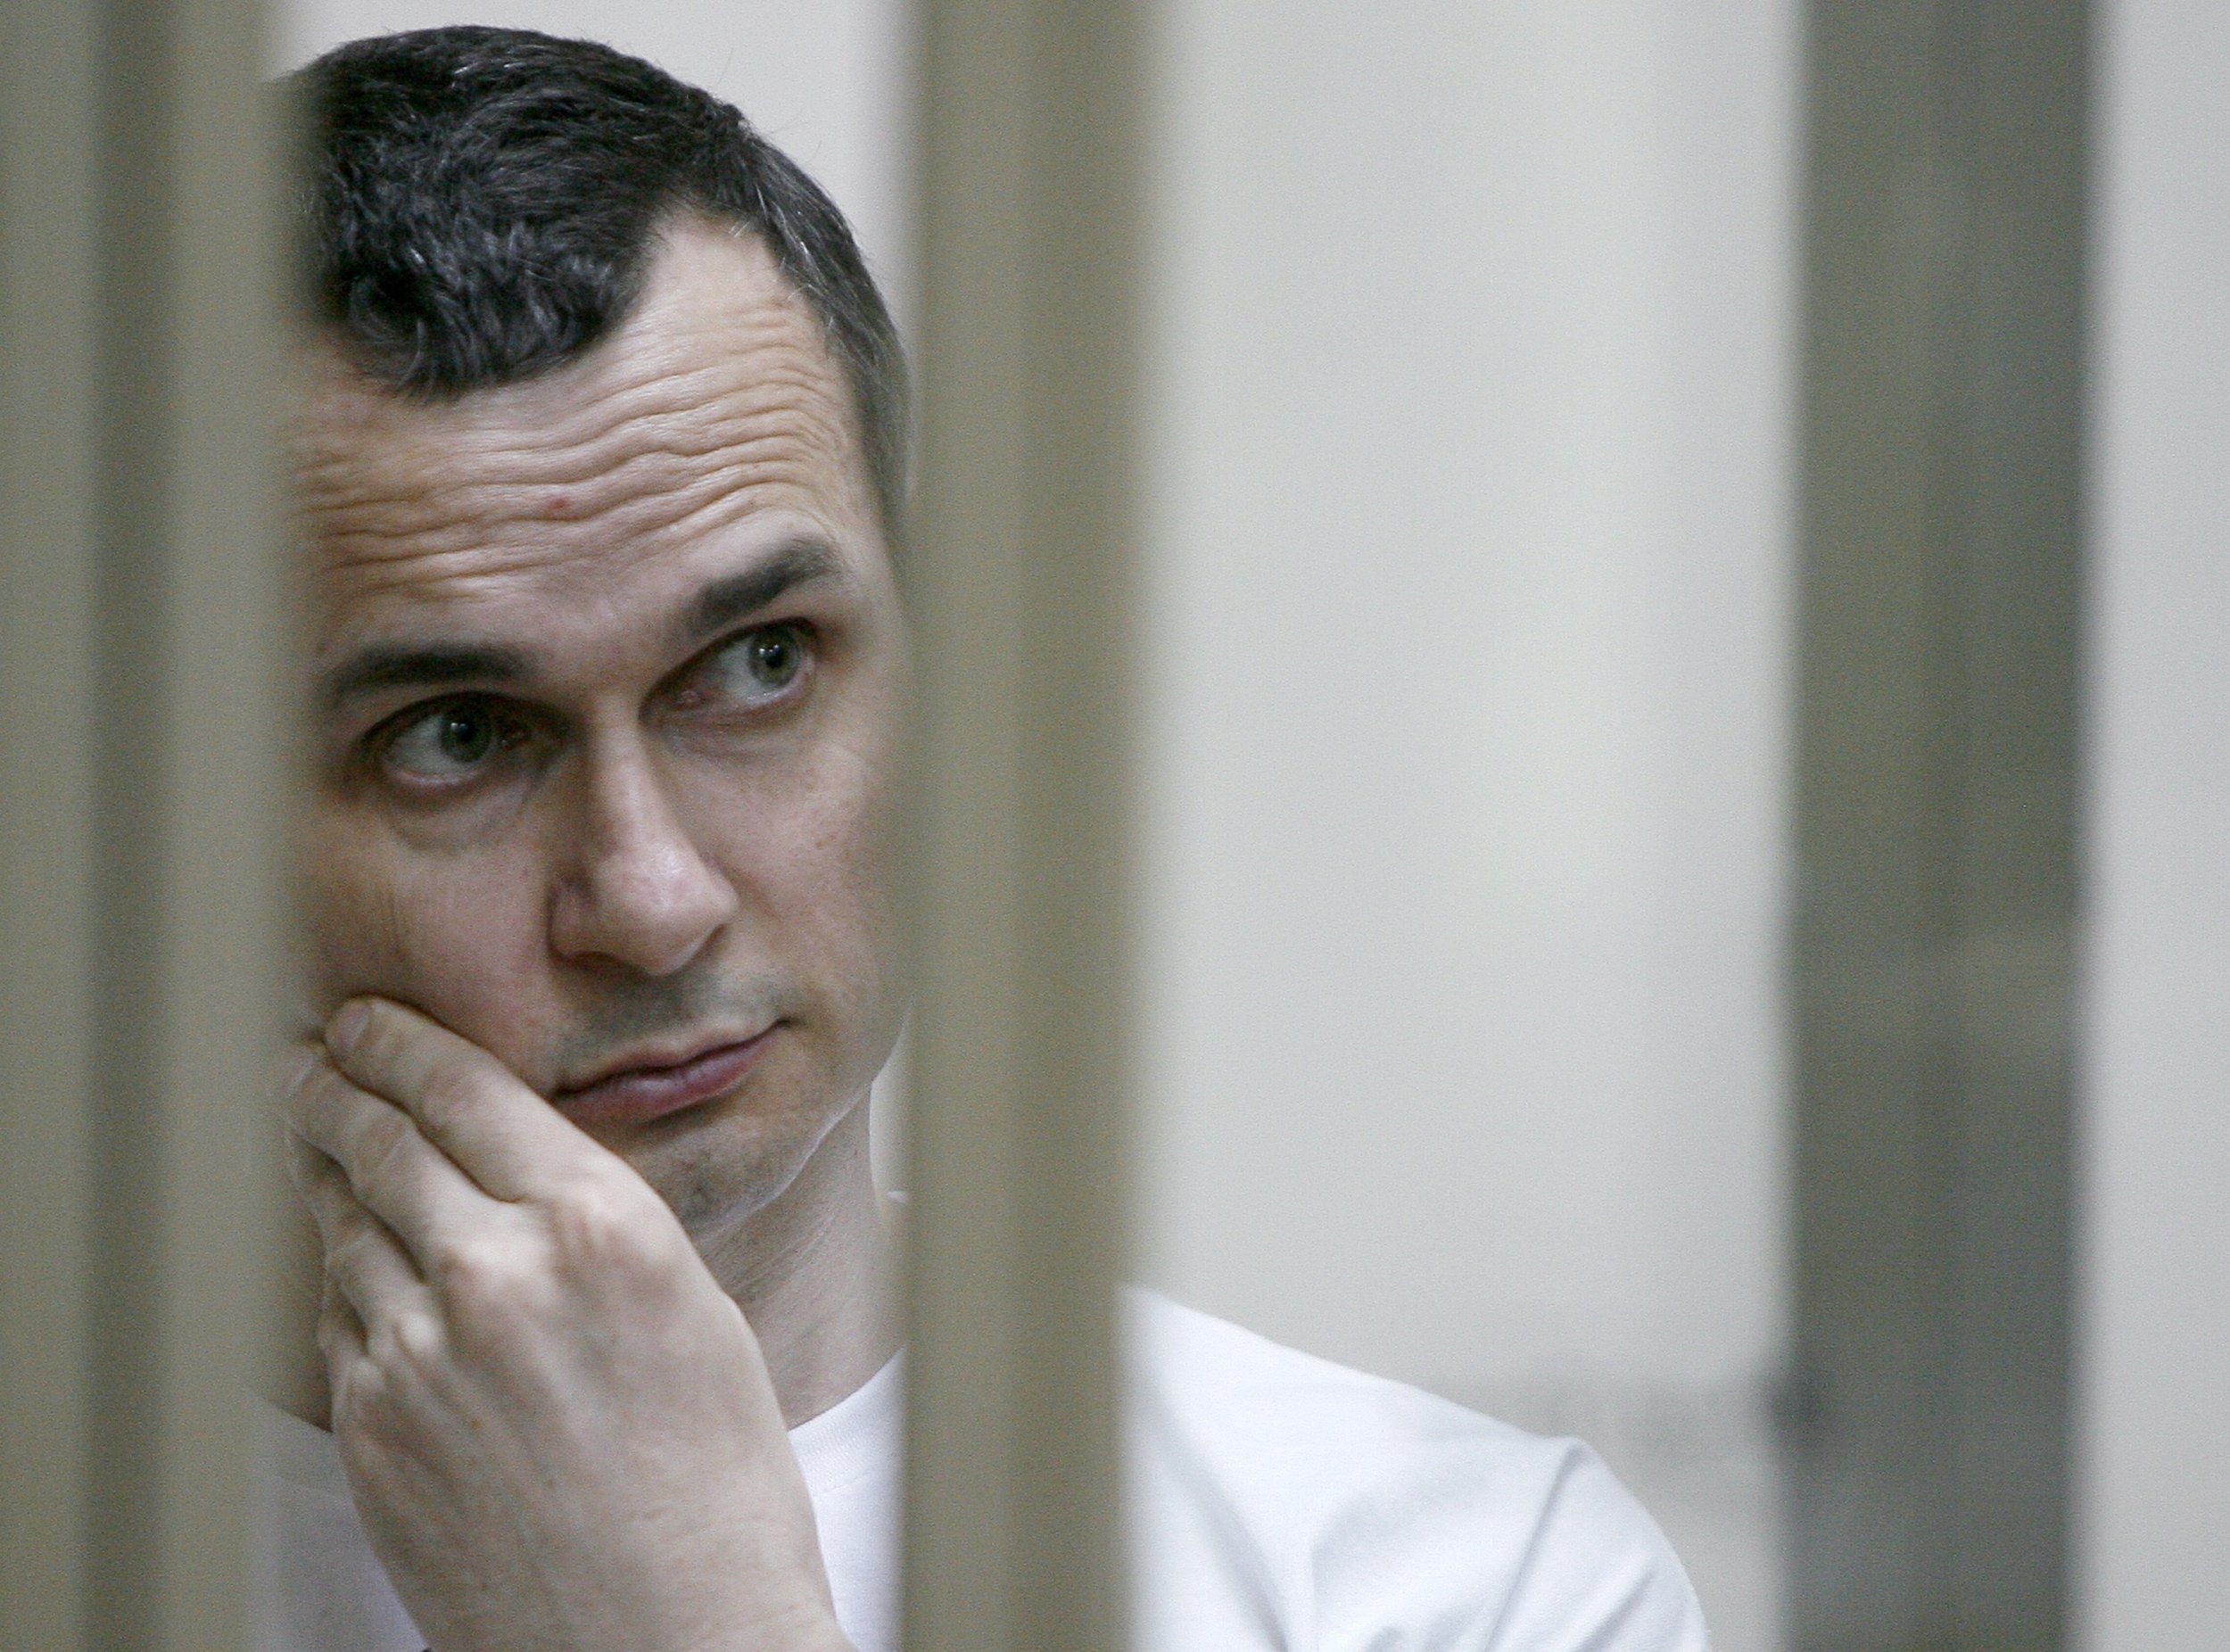 Russian Court Sentences Ukrainian Filmmaker Oleh Sentsov To 20 Years In Prison For Planning